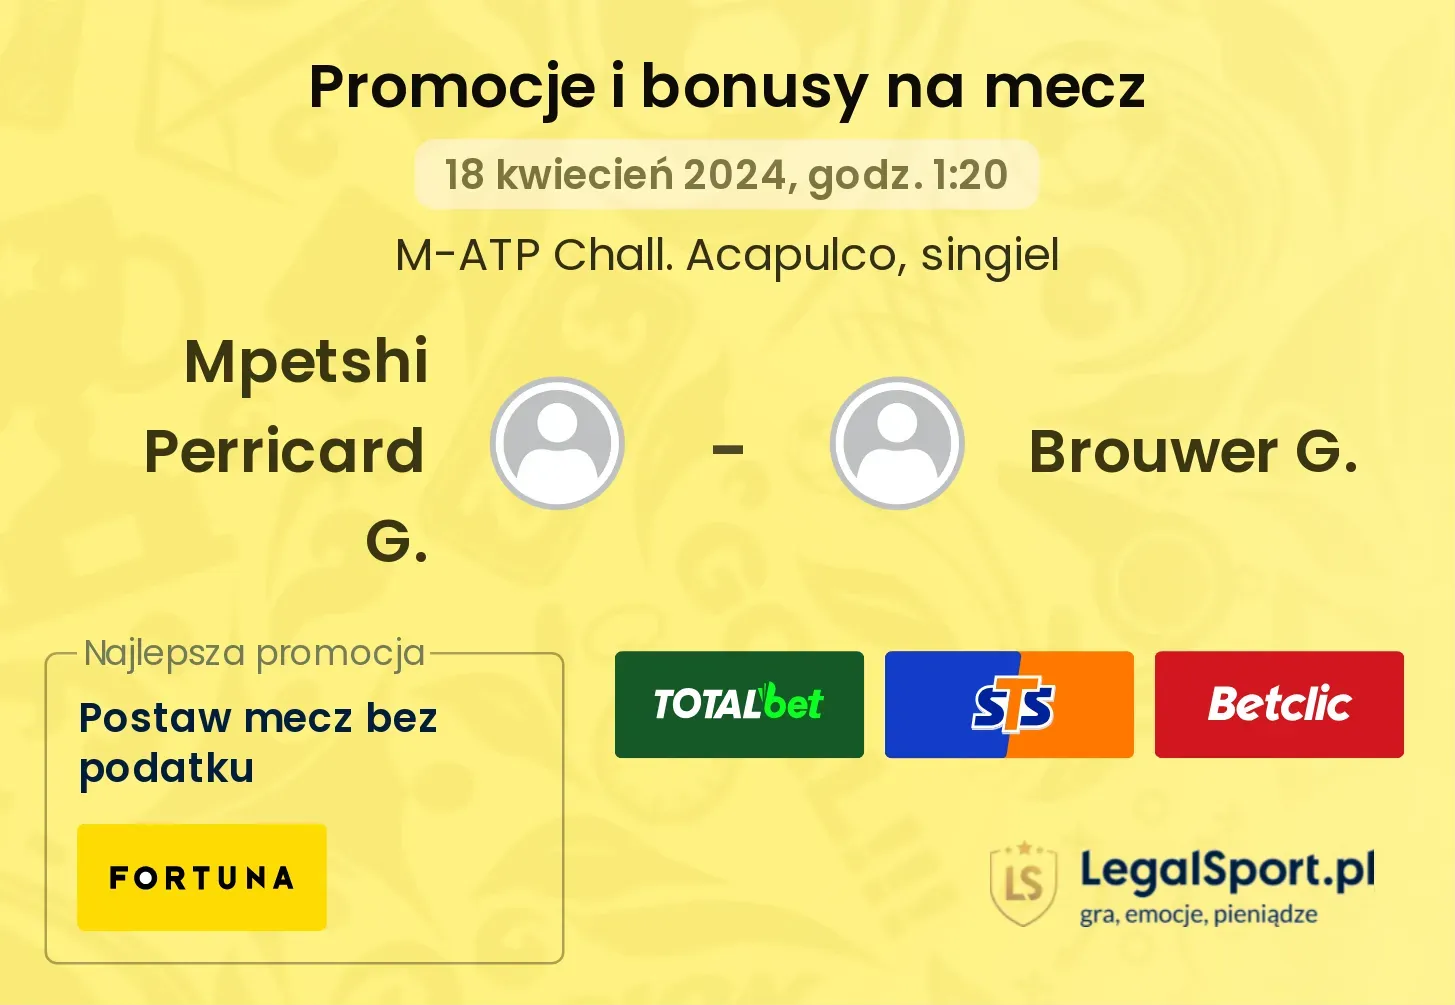 Mpetshi Perricard G. - Brouwer G. promocje bonusy na mecz